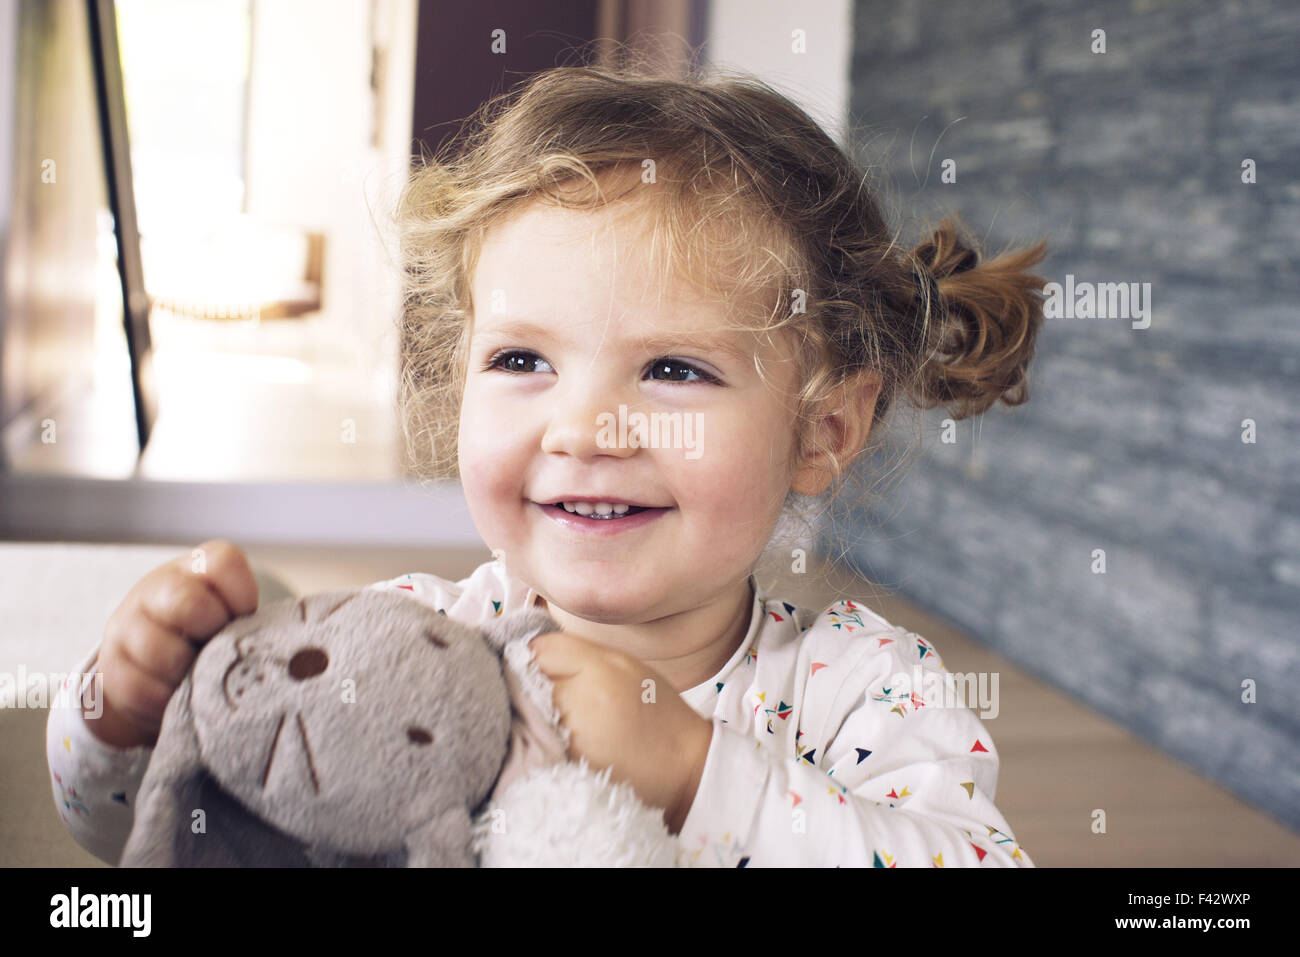 Little girl holding stuffed toy, smiling, portrait Stock Photo